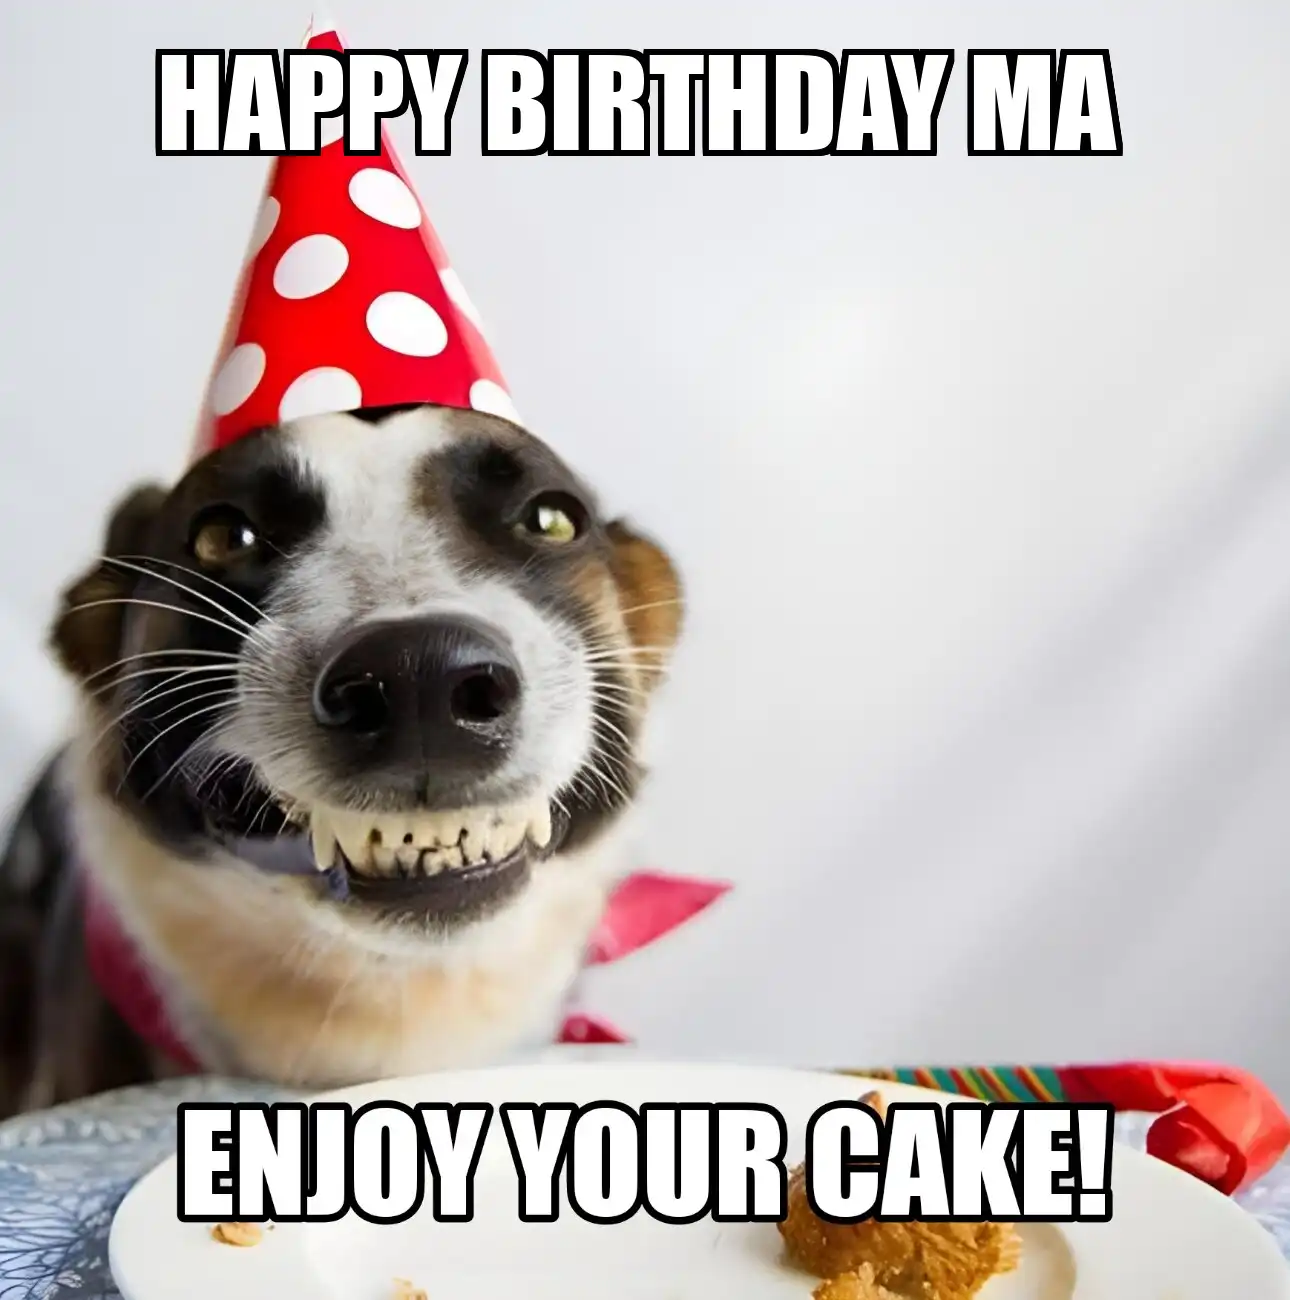 Happy Birthday Ma Enjoy Your Cake Dog Meme